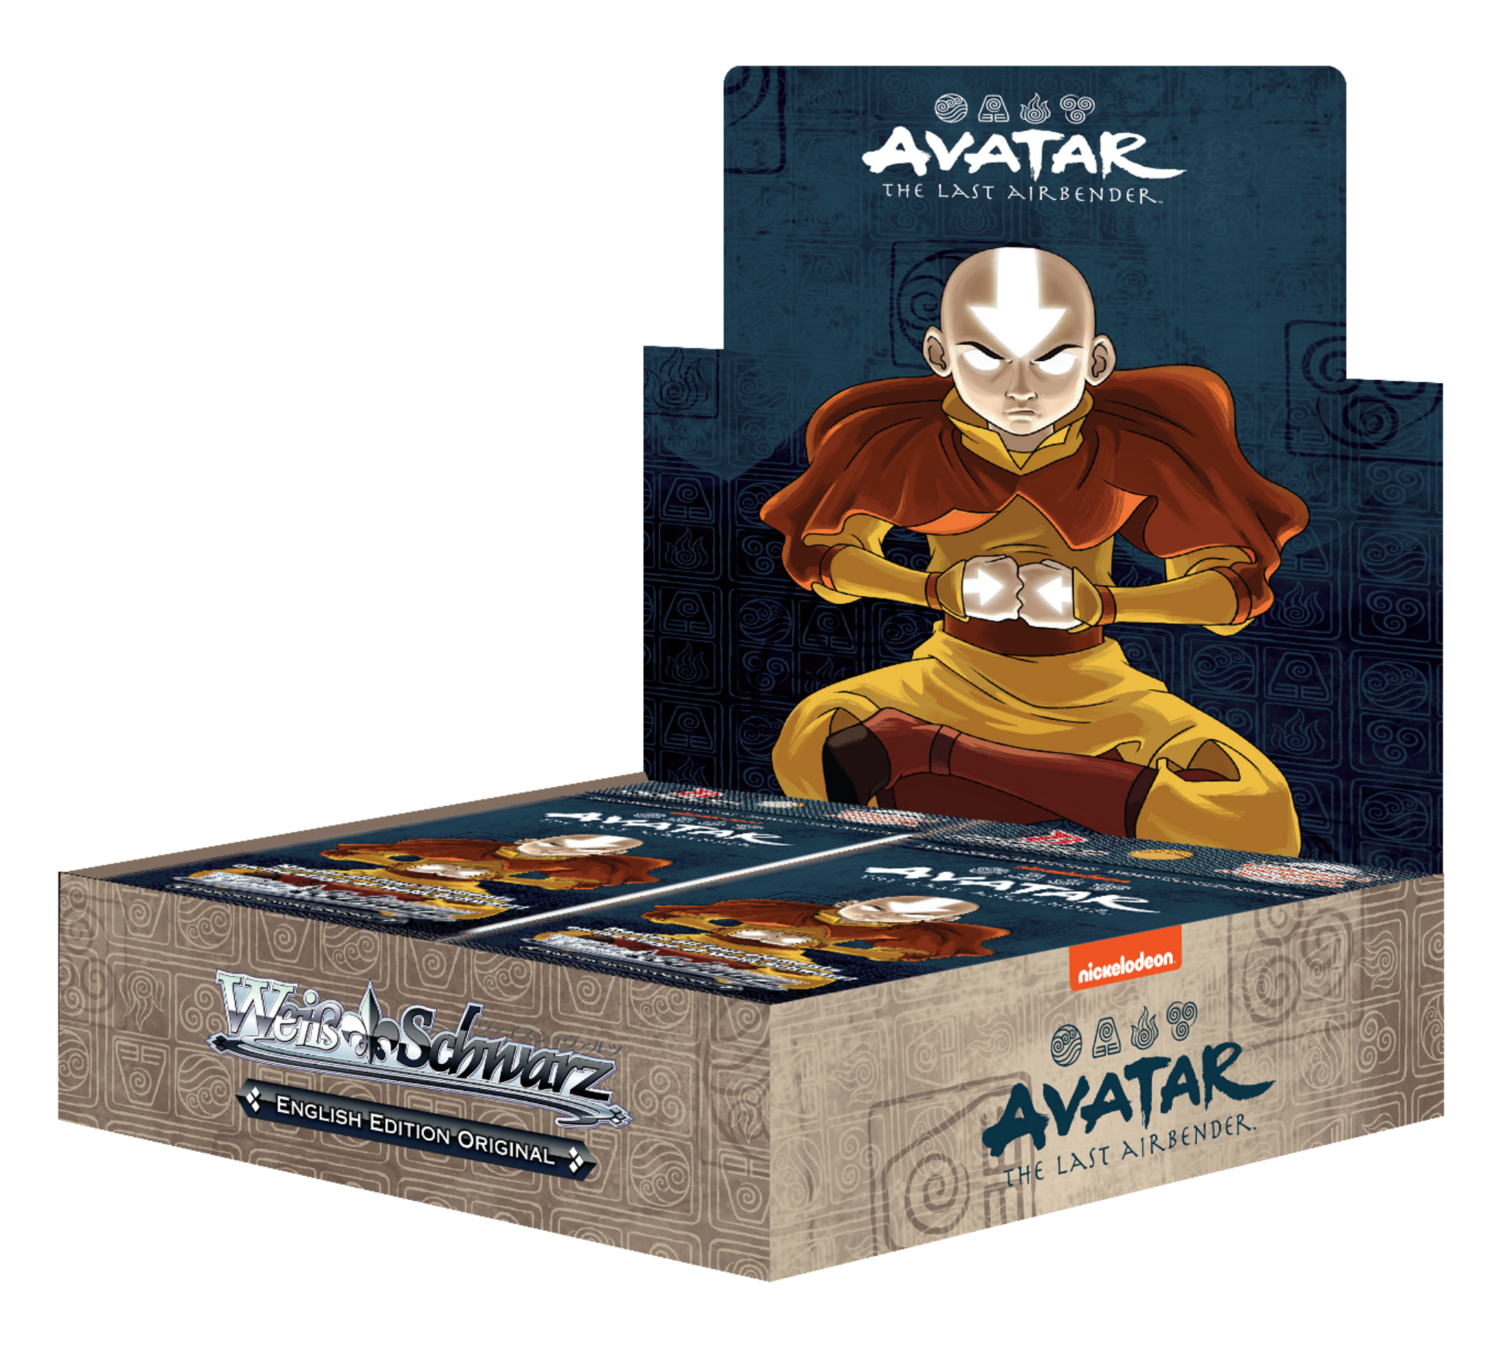 Avatar the Last Airbender Case